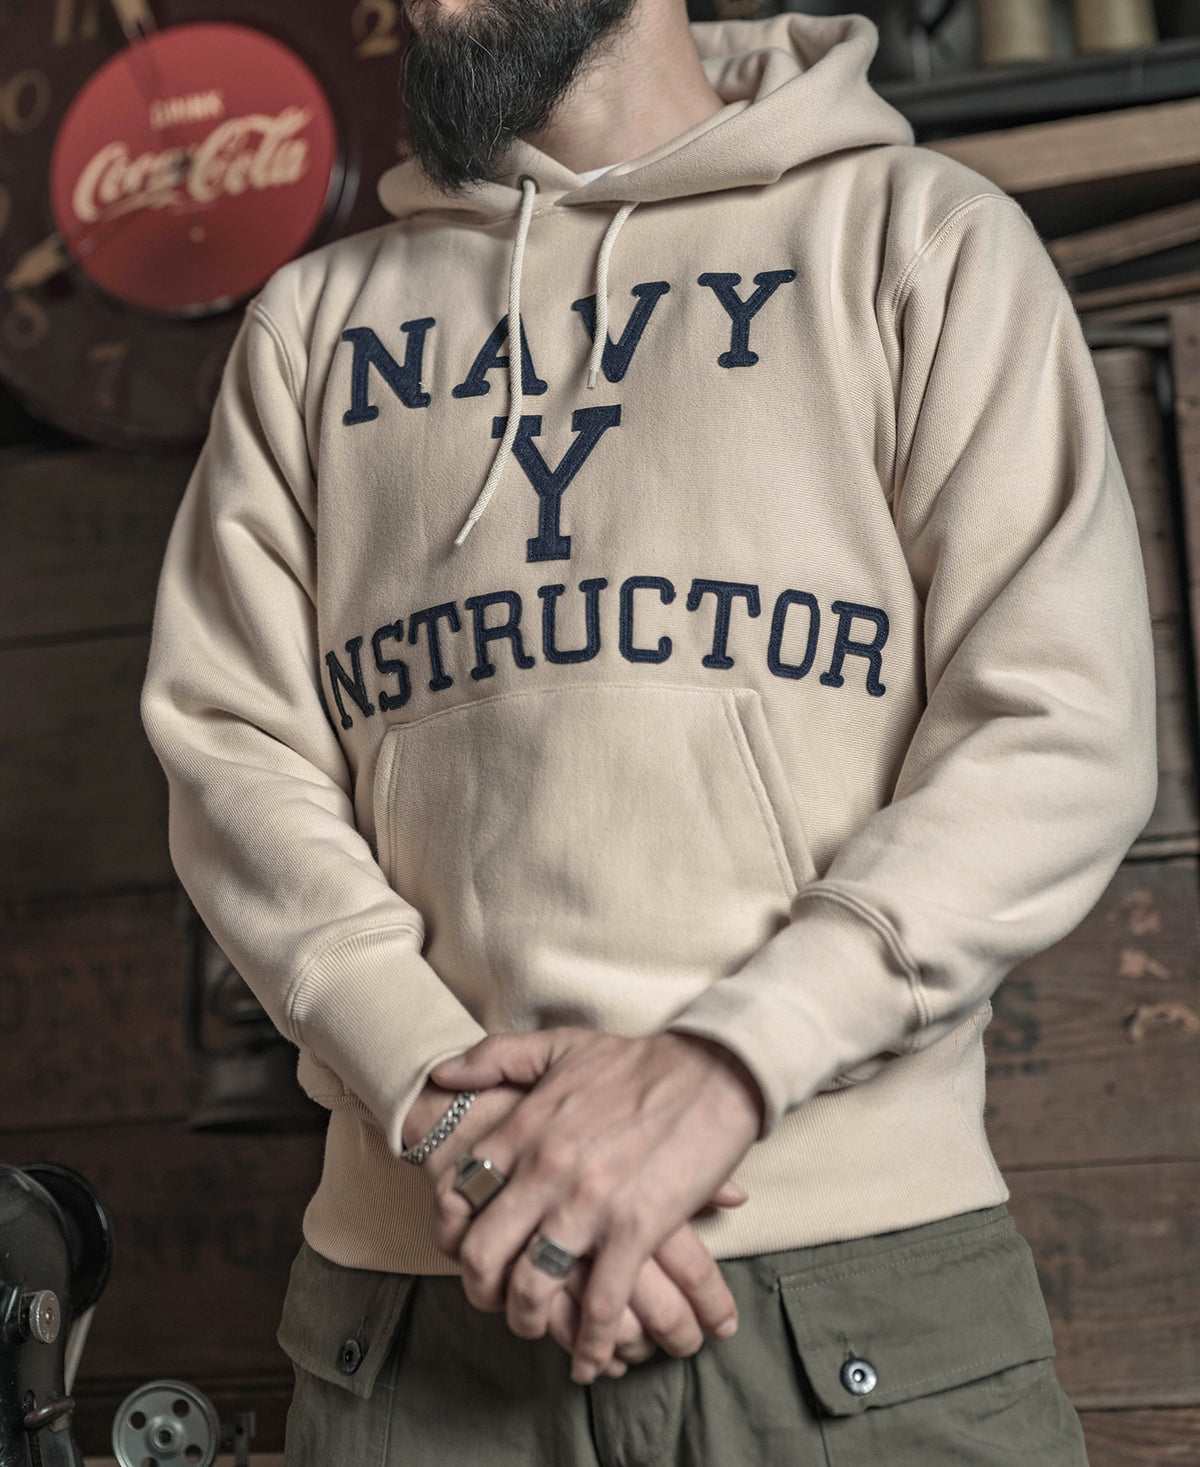 21 oz Navy Yard Instructor Reverse Weave Hoodie - Apricot